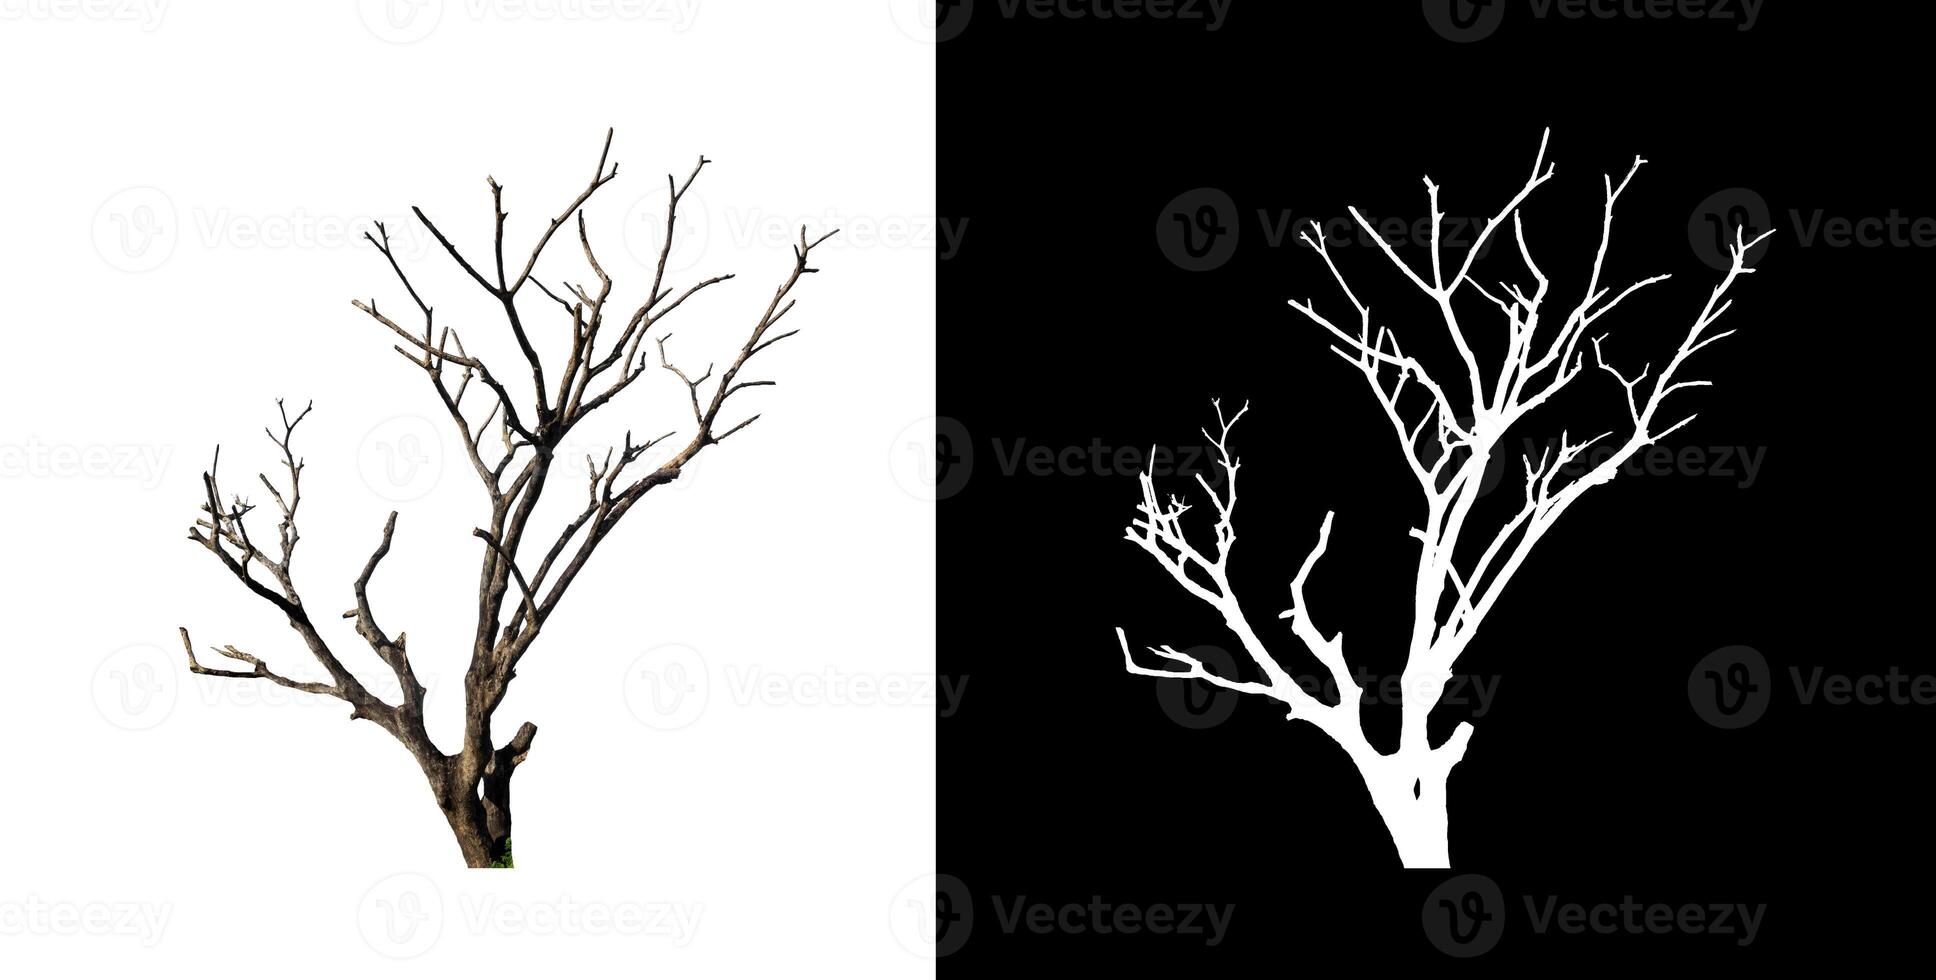 dood boom Aan wit afbeelding achtergrond met knipsel pad, single boom met knipsel pad en alpha kanaal foto